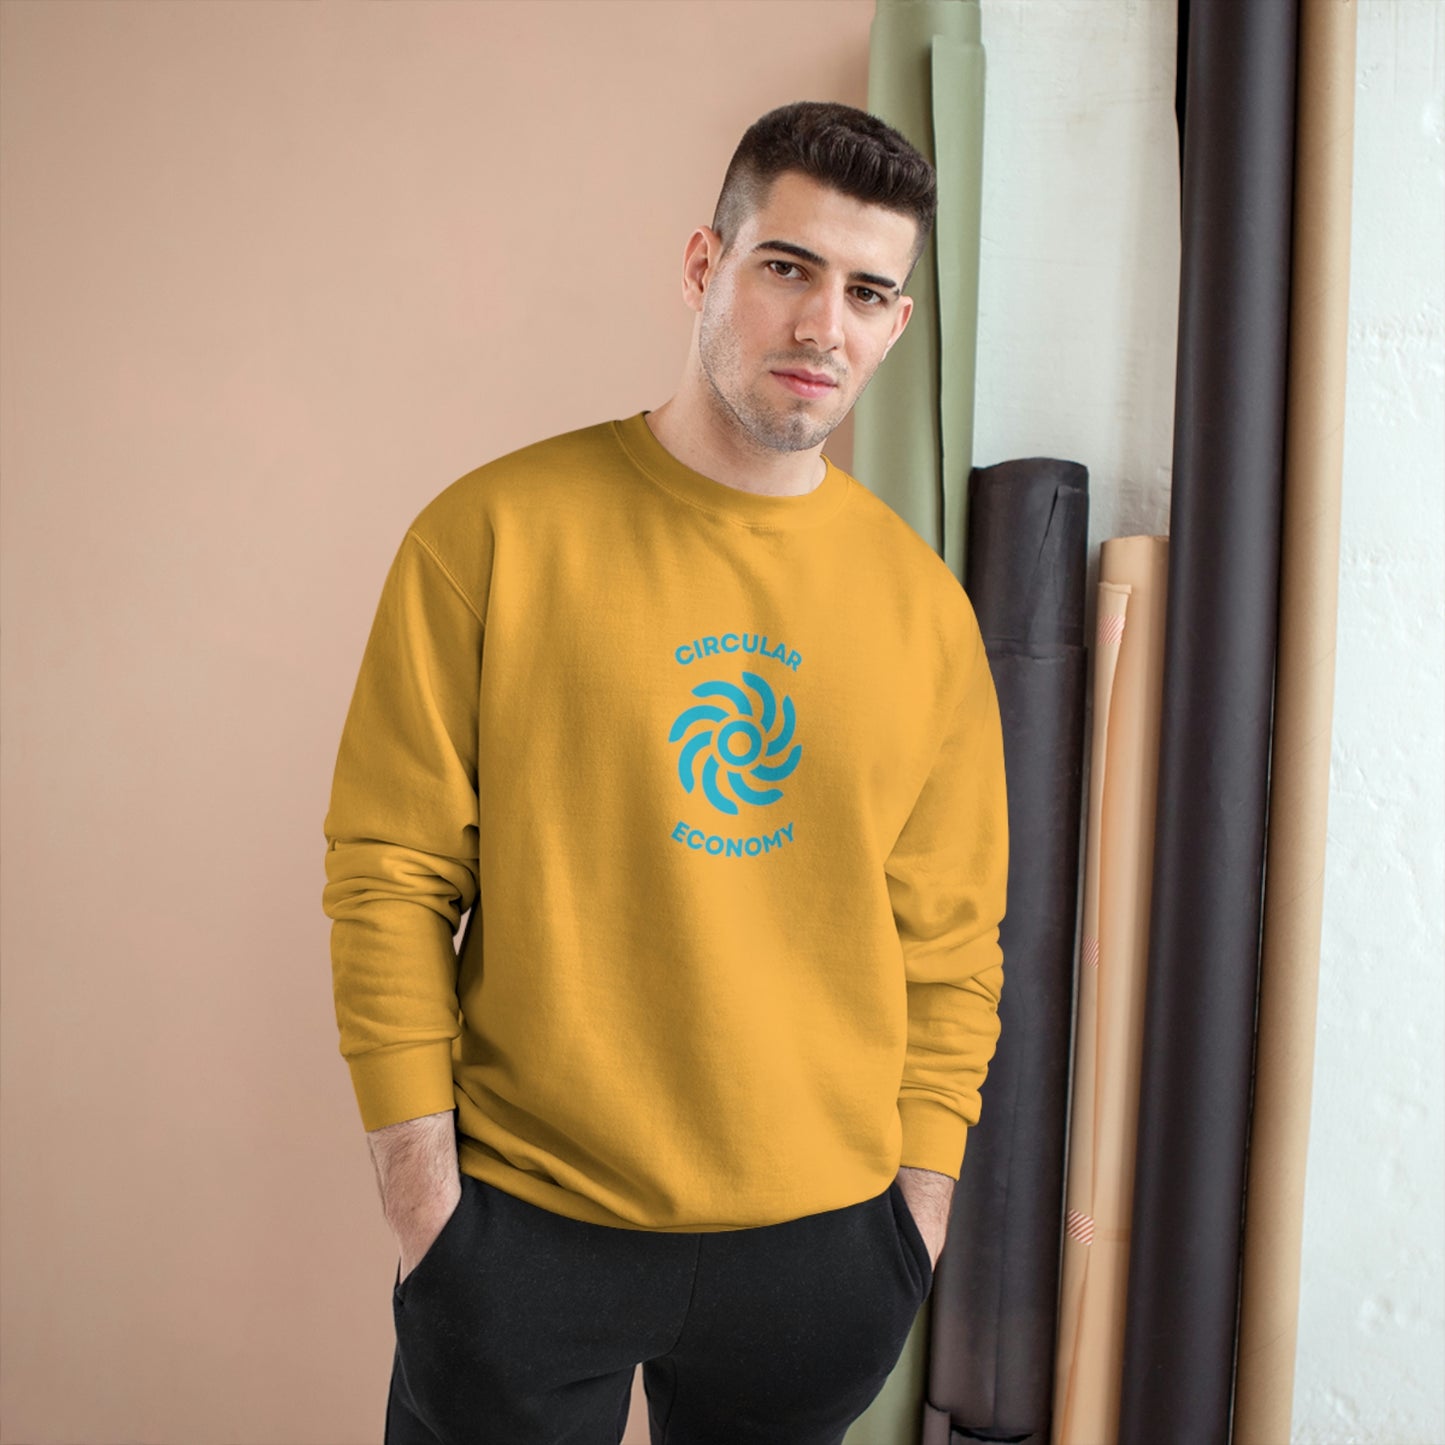 Champion Sweatshirt - CIRCULAR ECONOMY